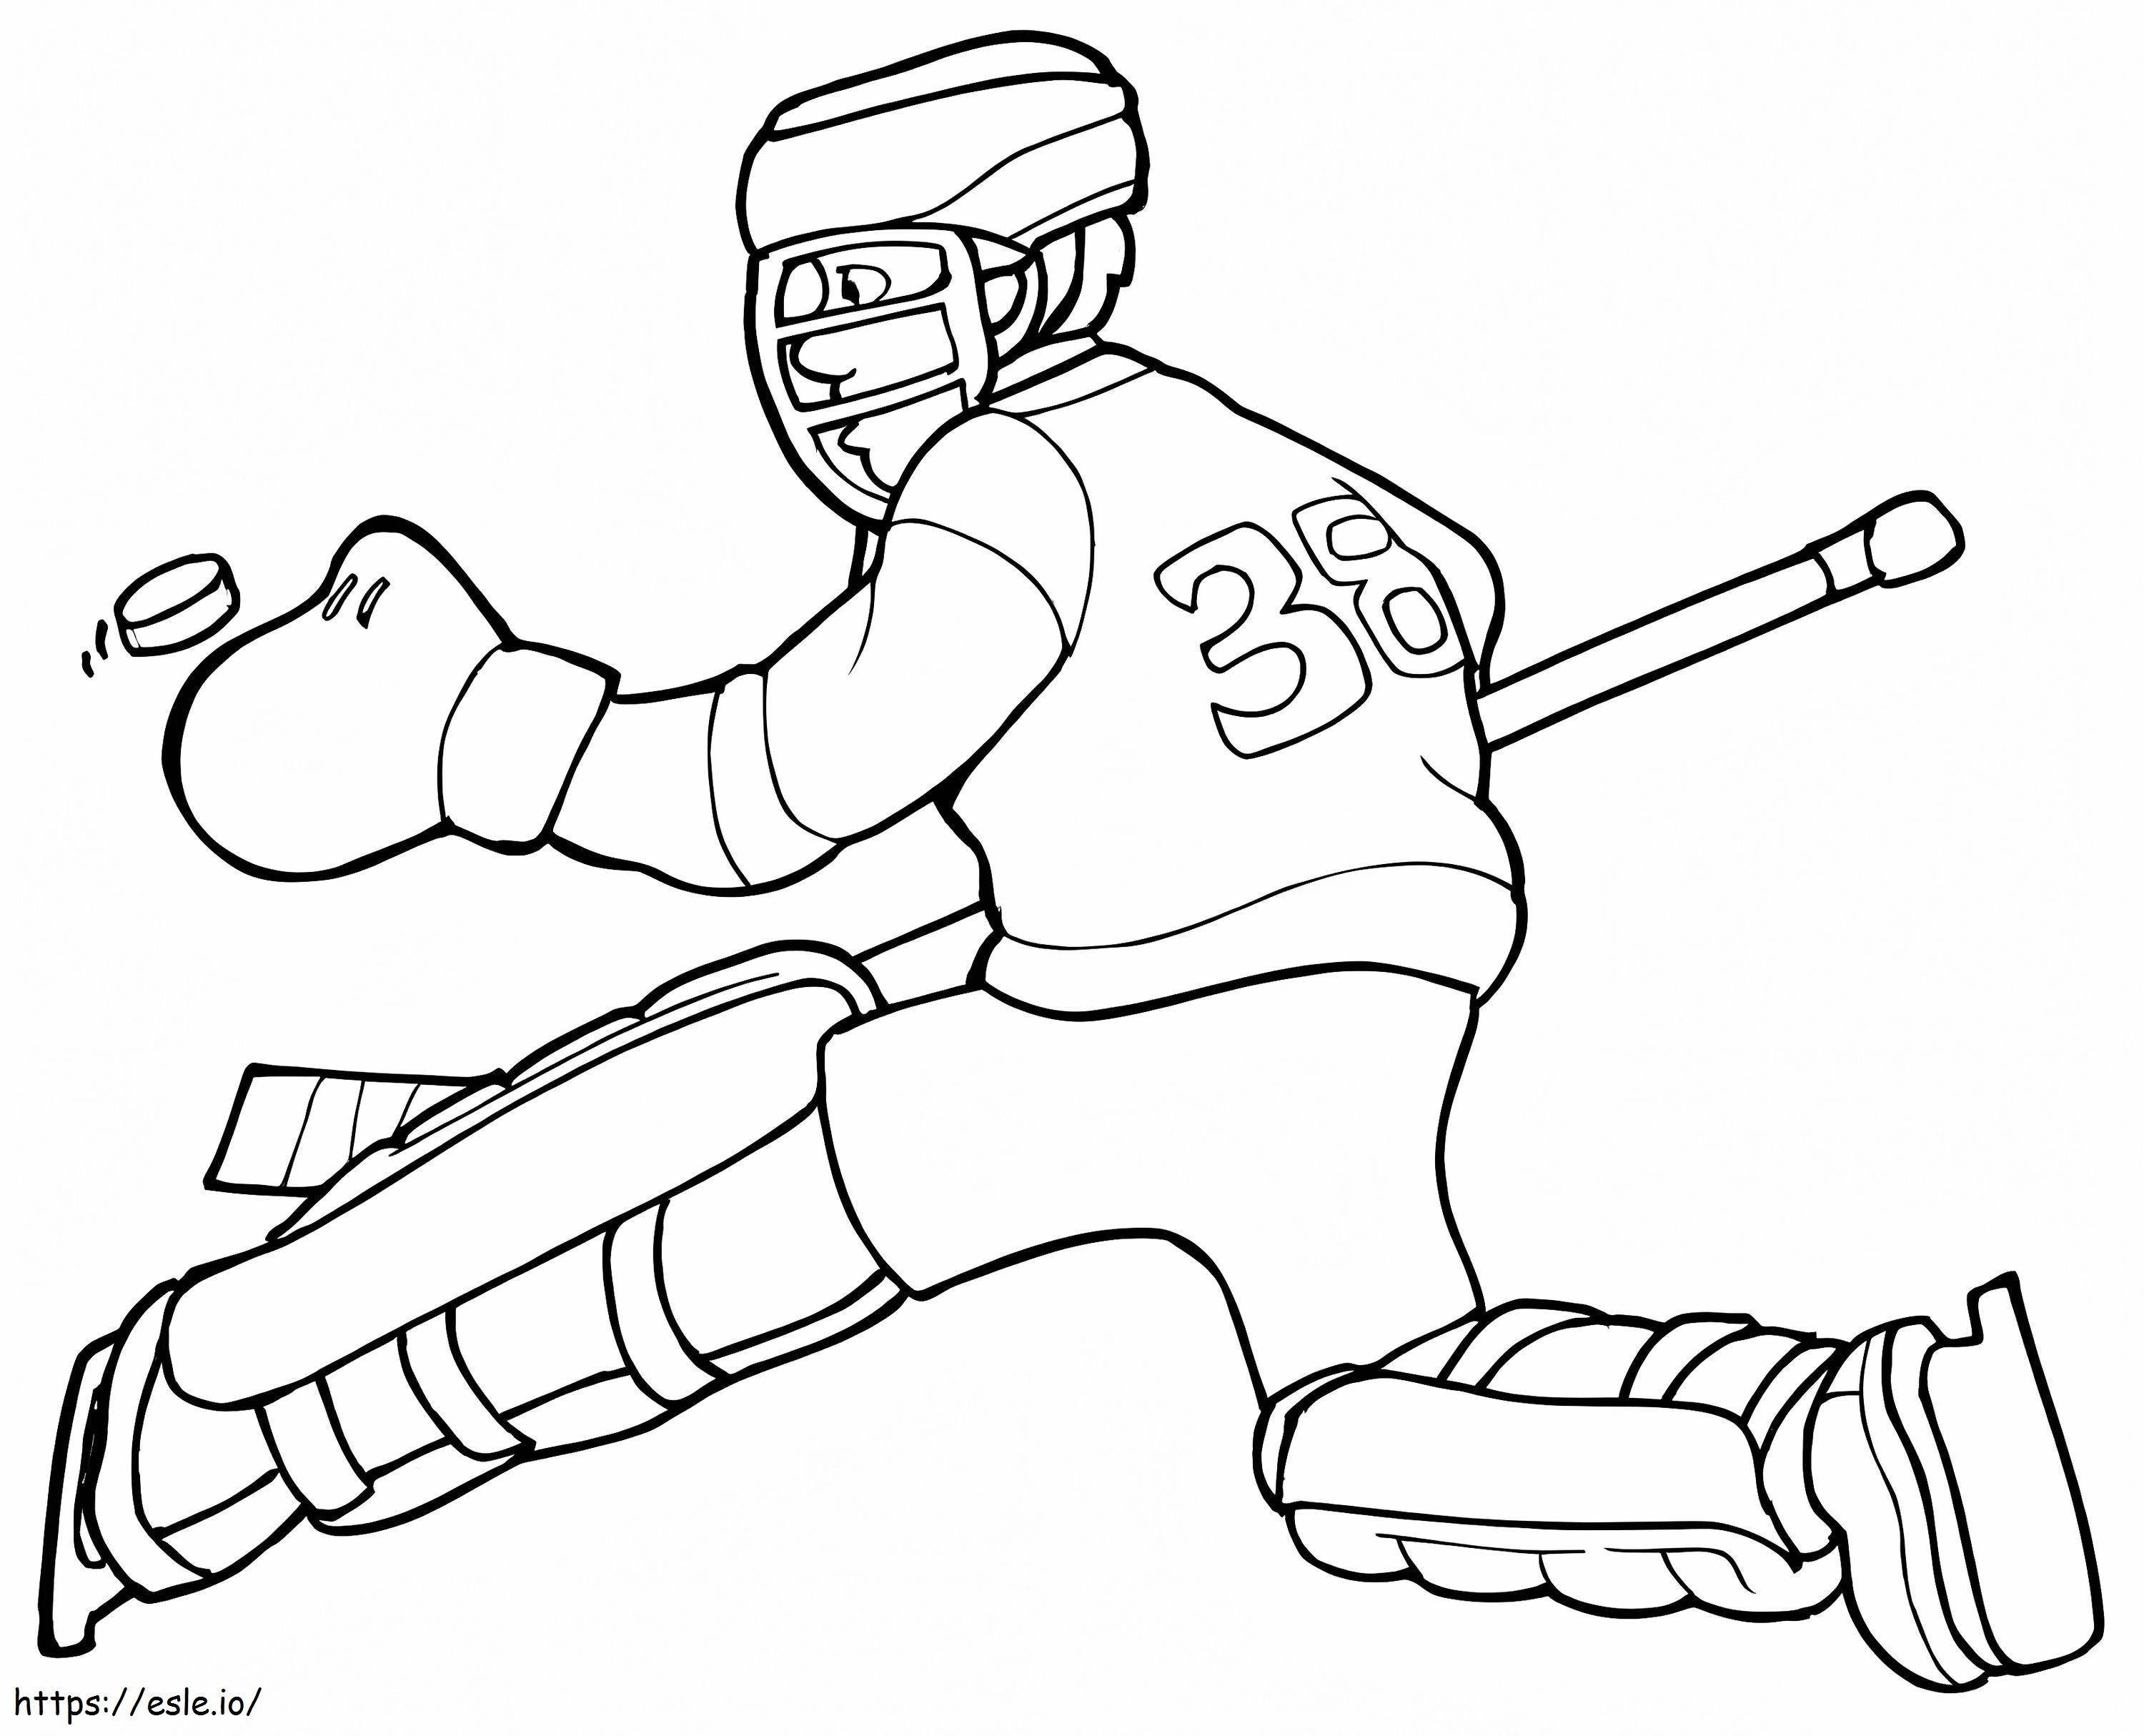 Geweldige hockeyspeler kleurplaat kleurplaat